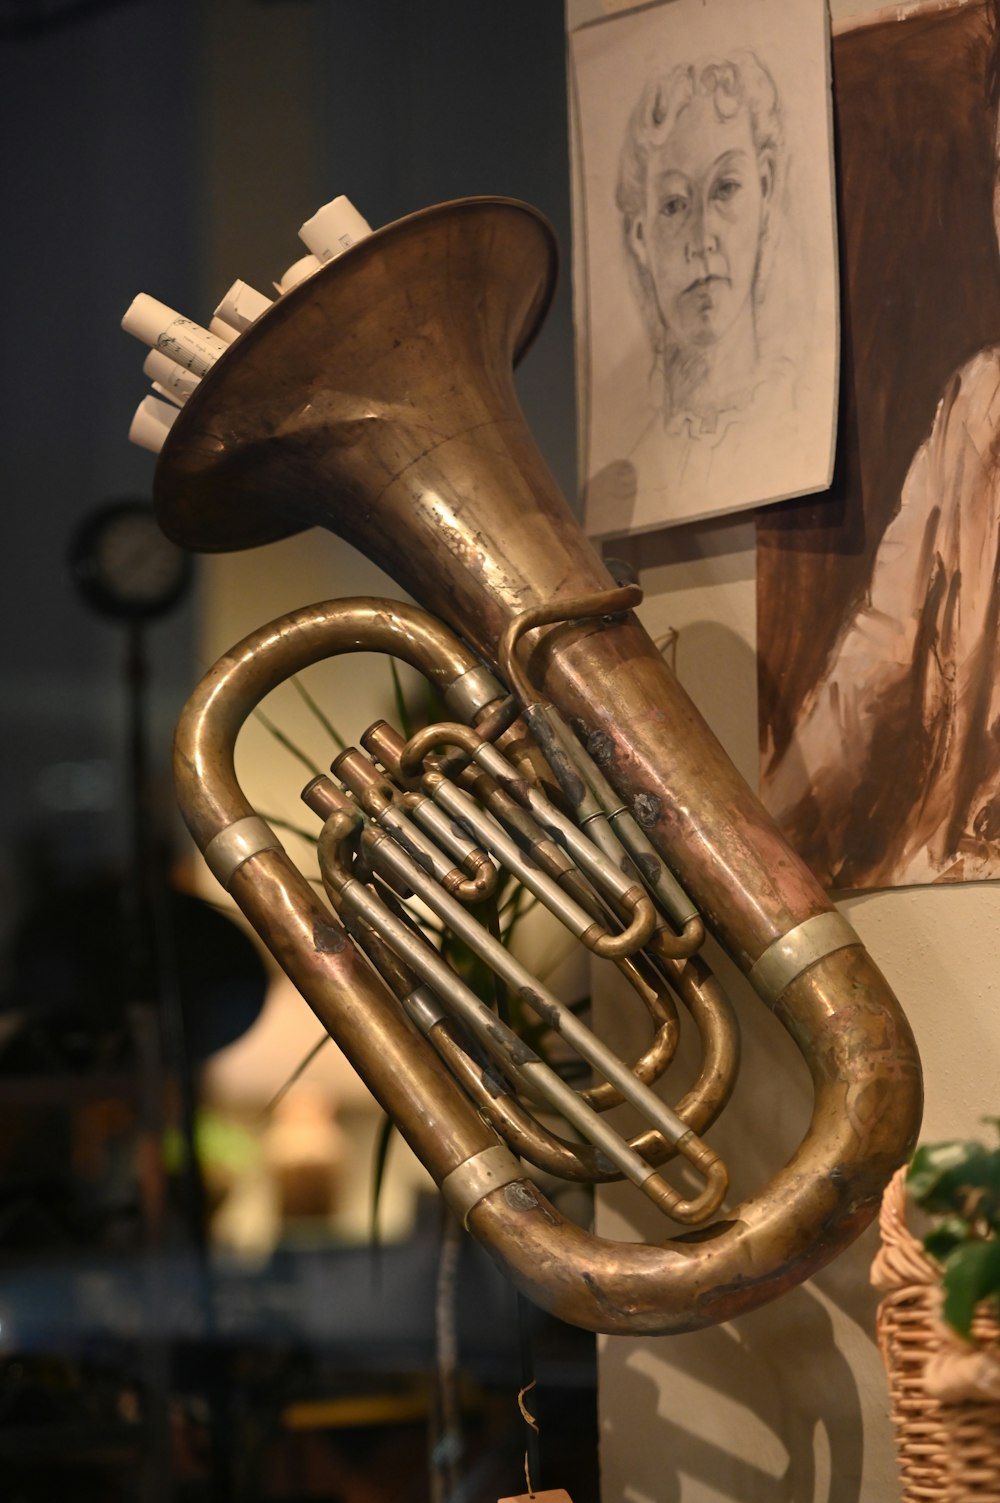 trompete cor de latão